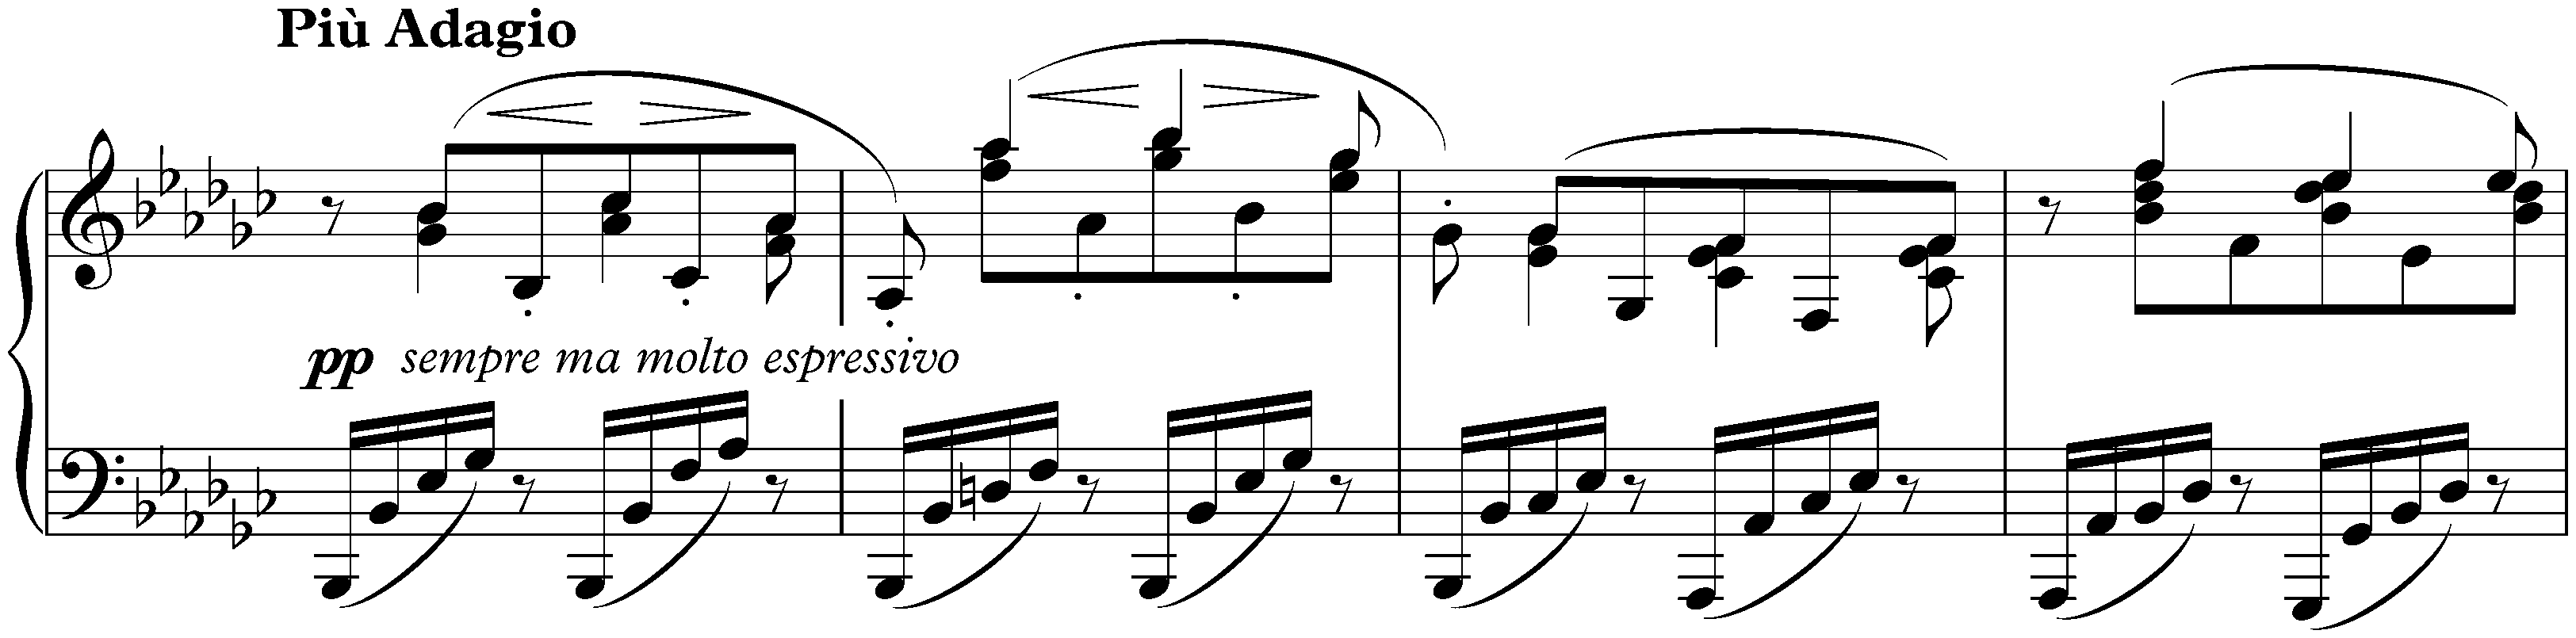 Three Intermezzi, op. 117; 1. E-flat major